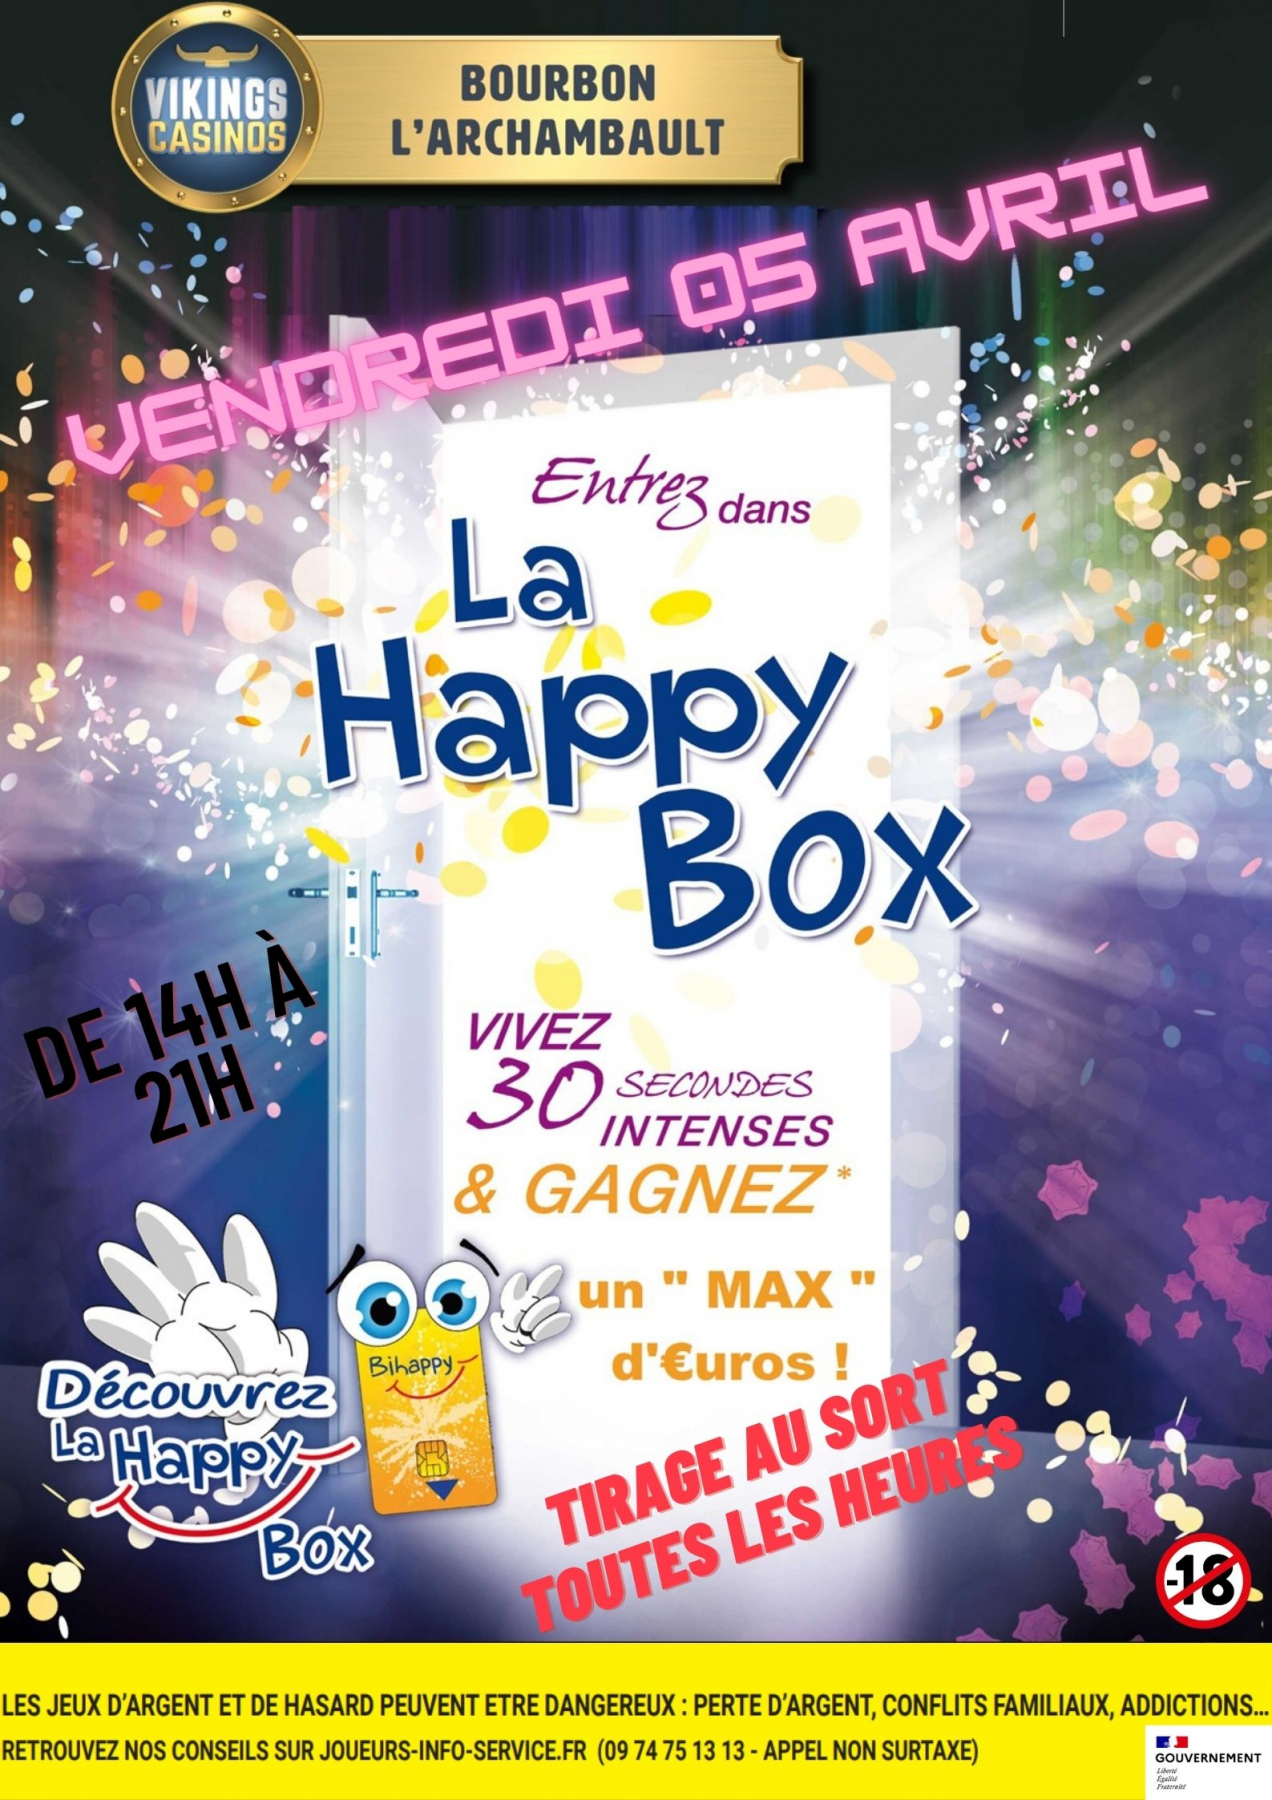 Happy Box